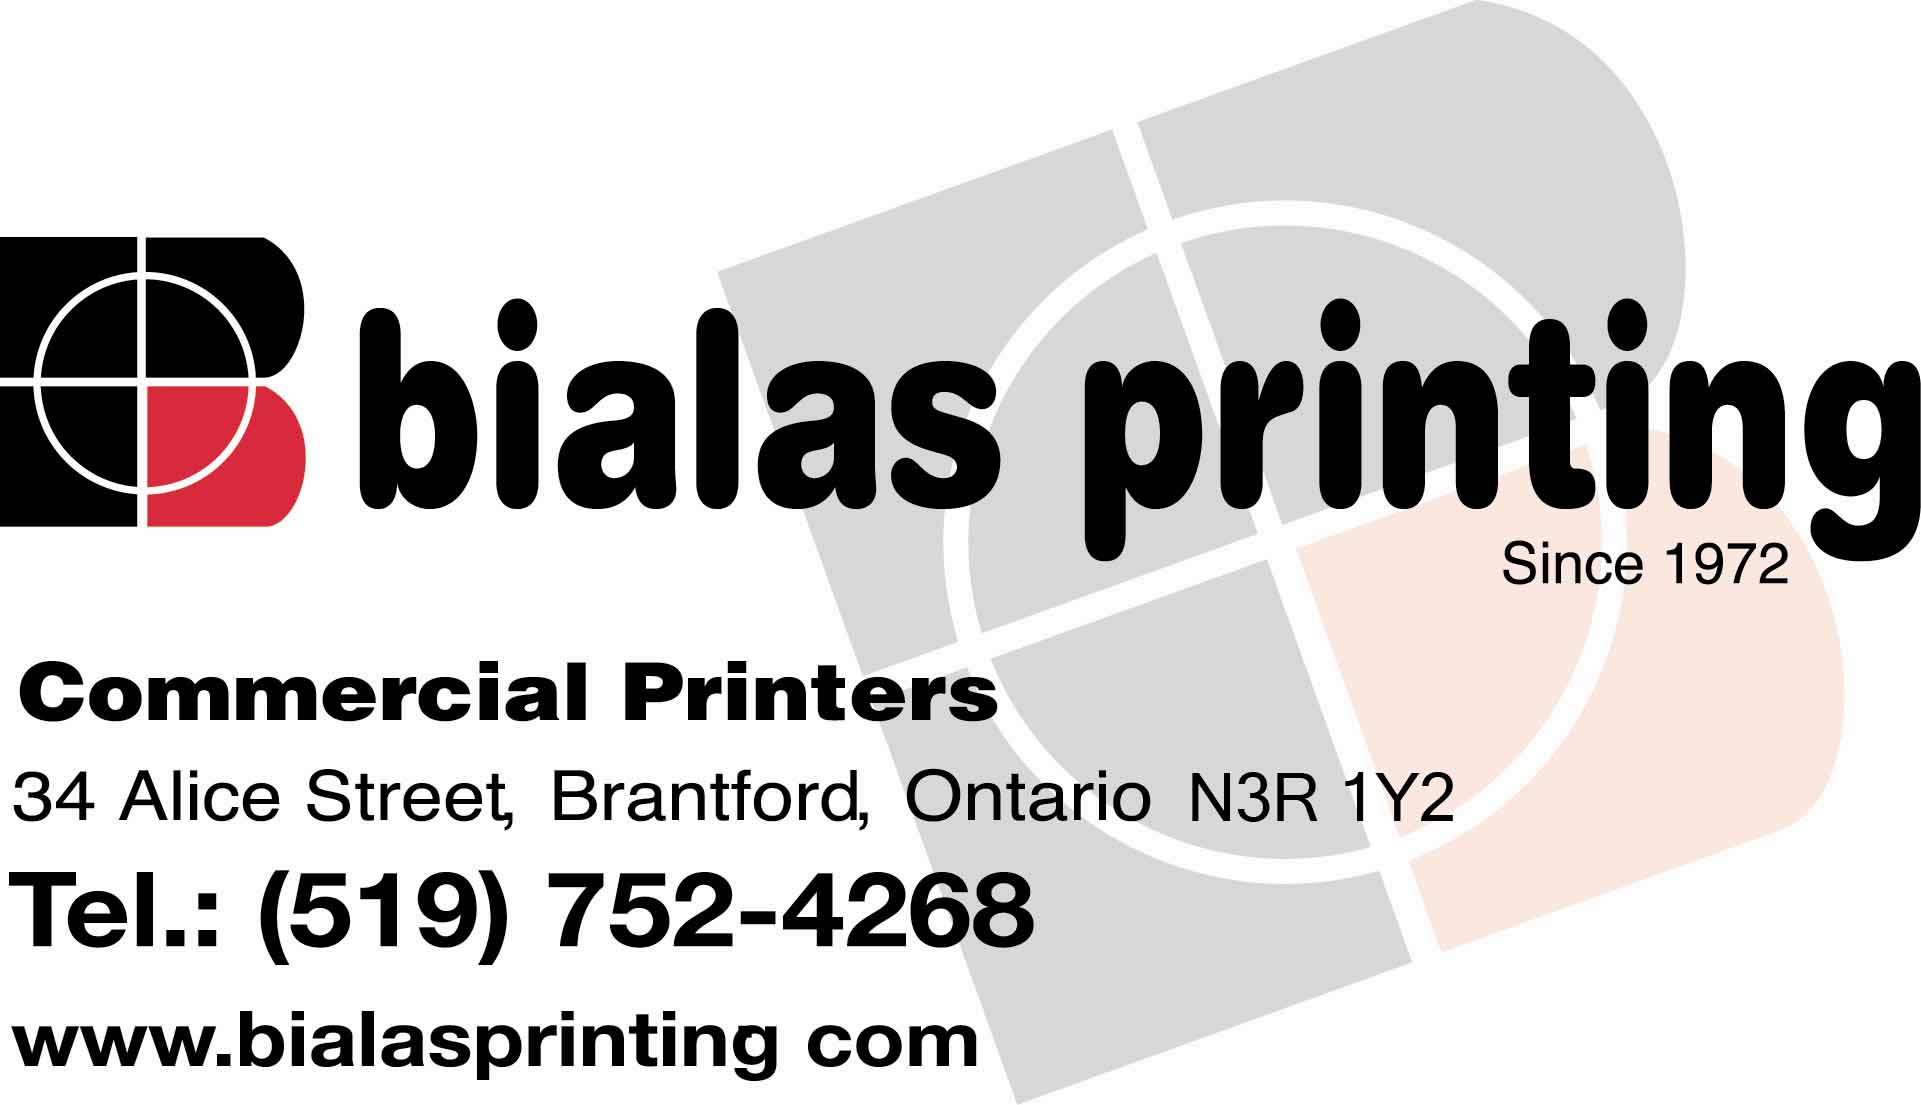 Bialas Printing Limited